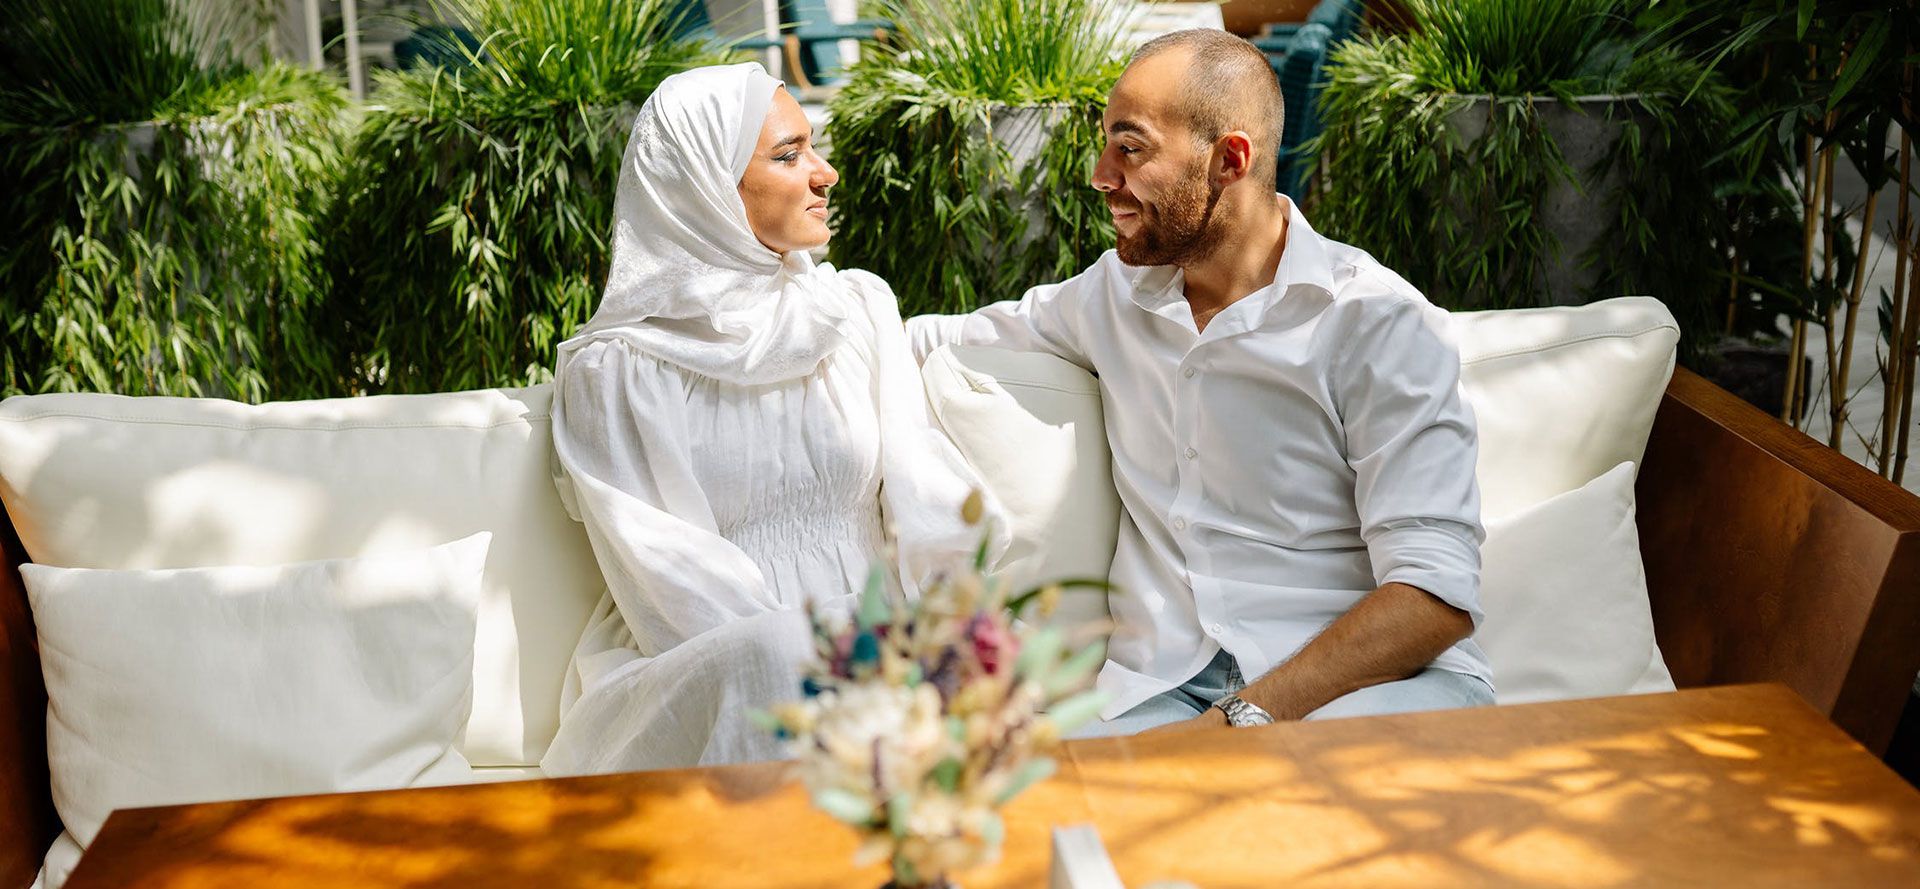 Muslim singles on a date.